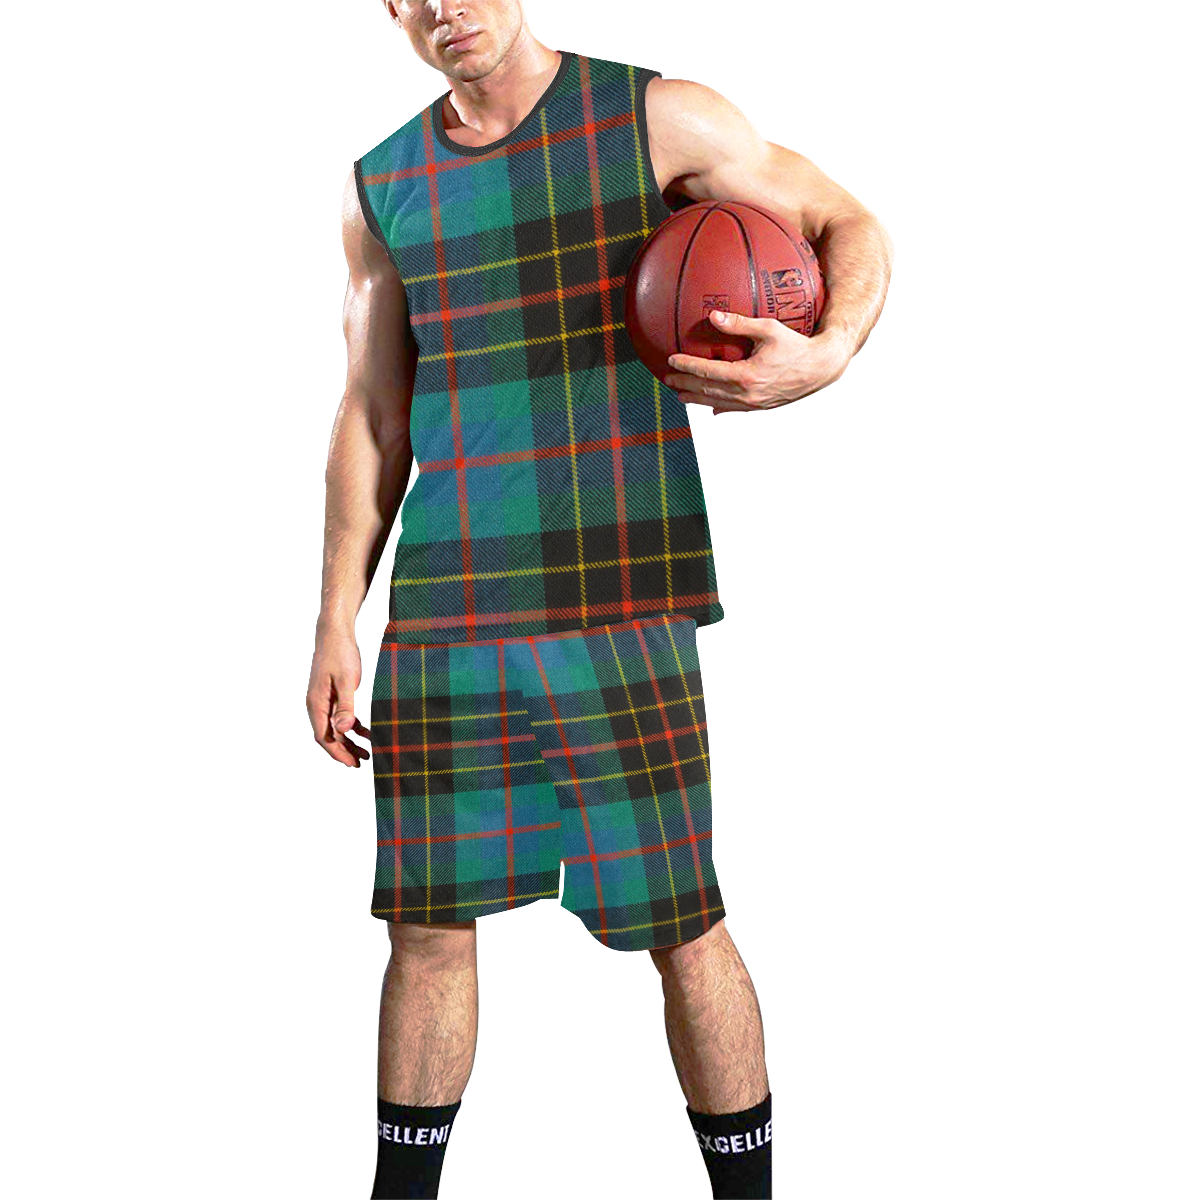 BRODIE HUNTING TARTAN All Over Print Basketball Uniform